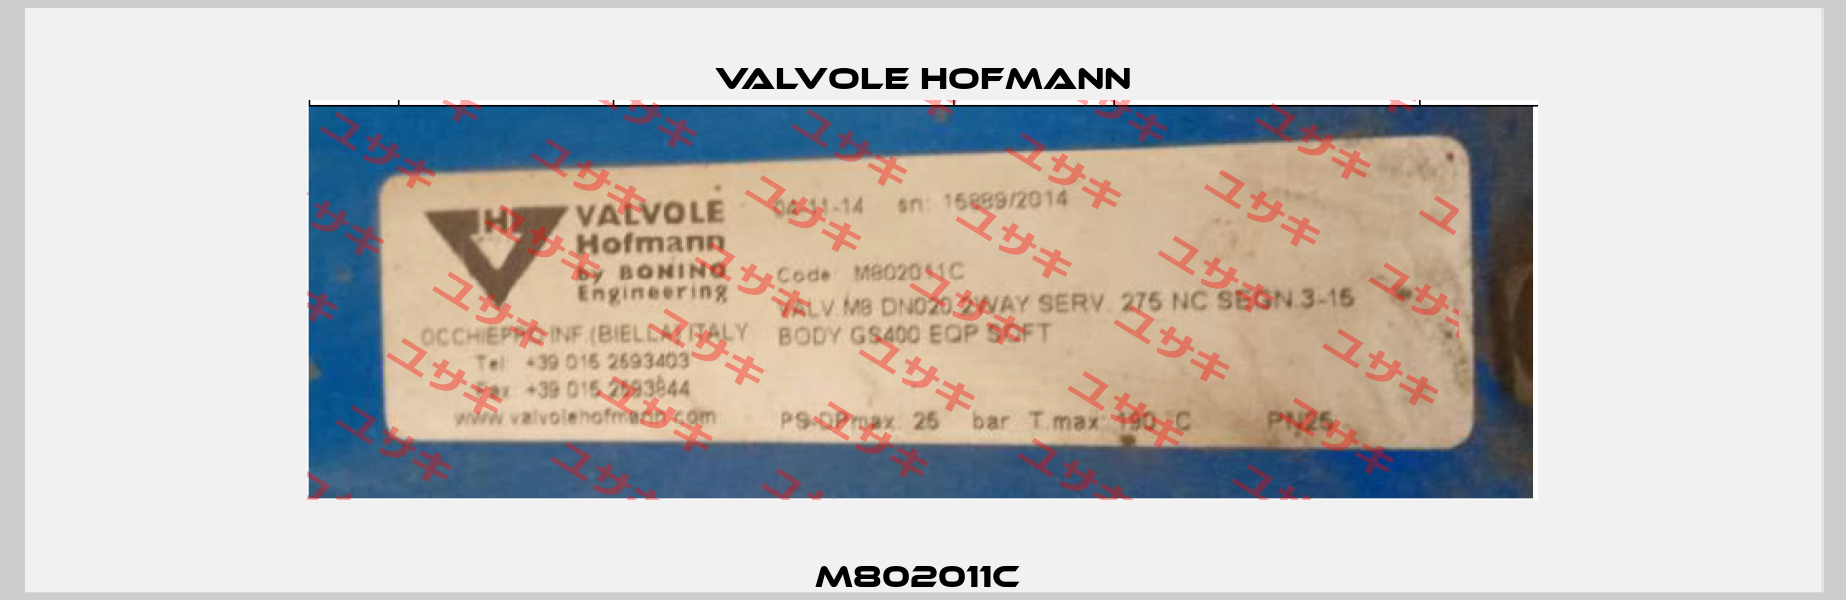 M802011C  Valvole Hofmann